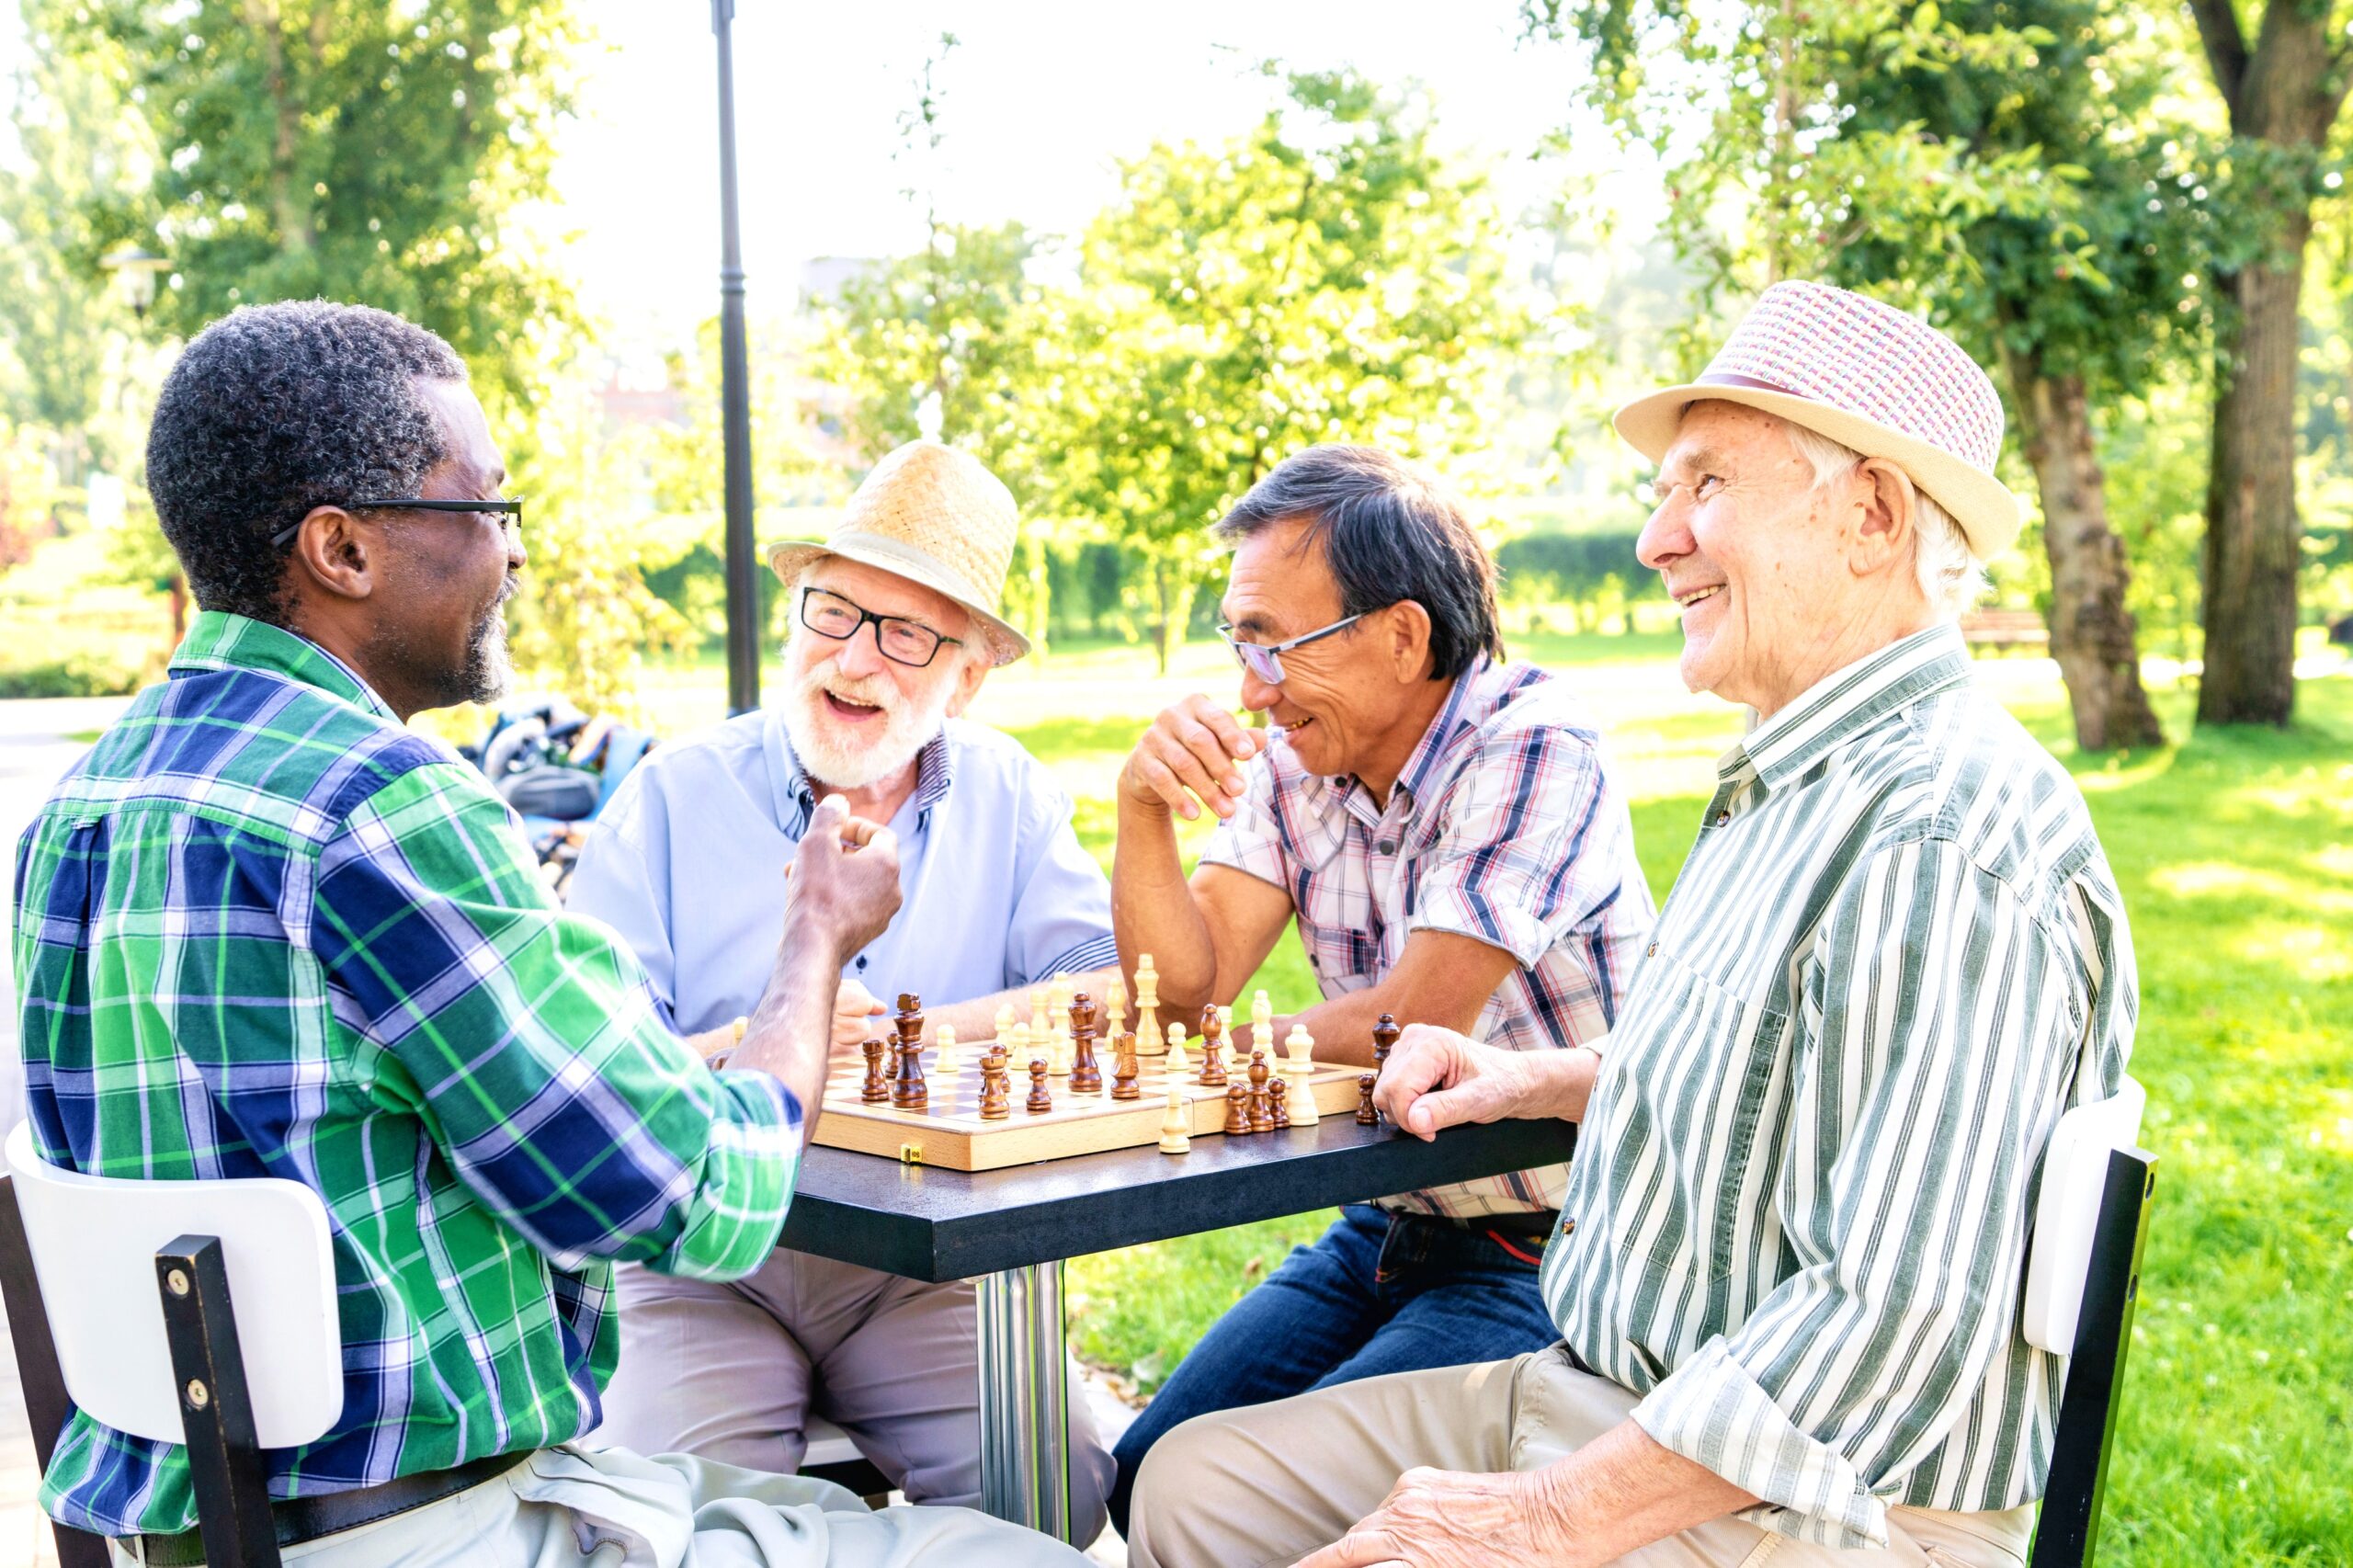 <img src="older people.jpg" alt="older people playing chess"/>